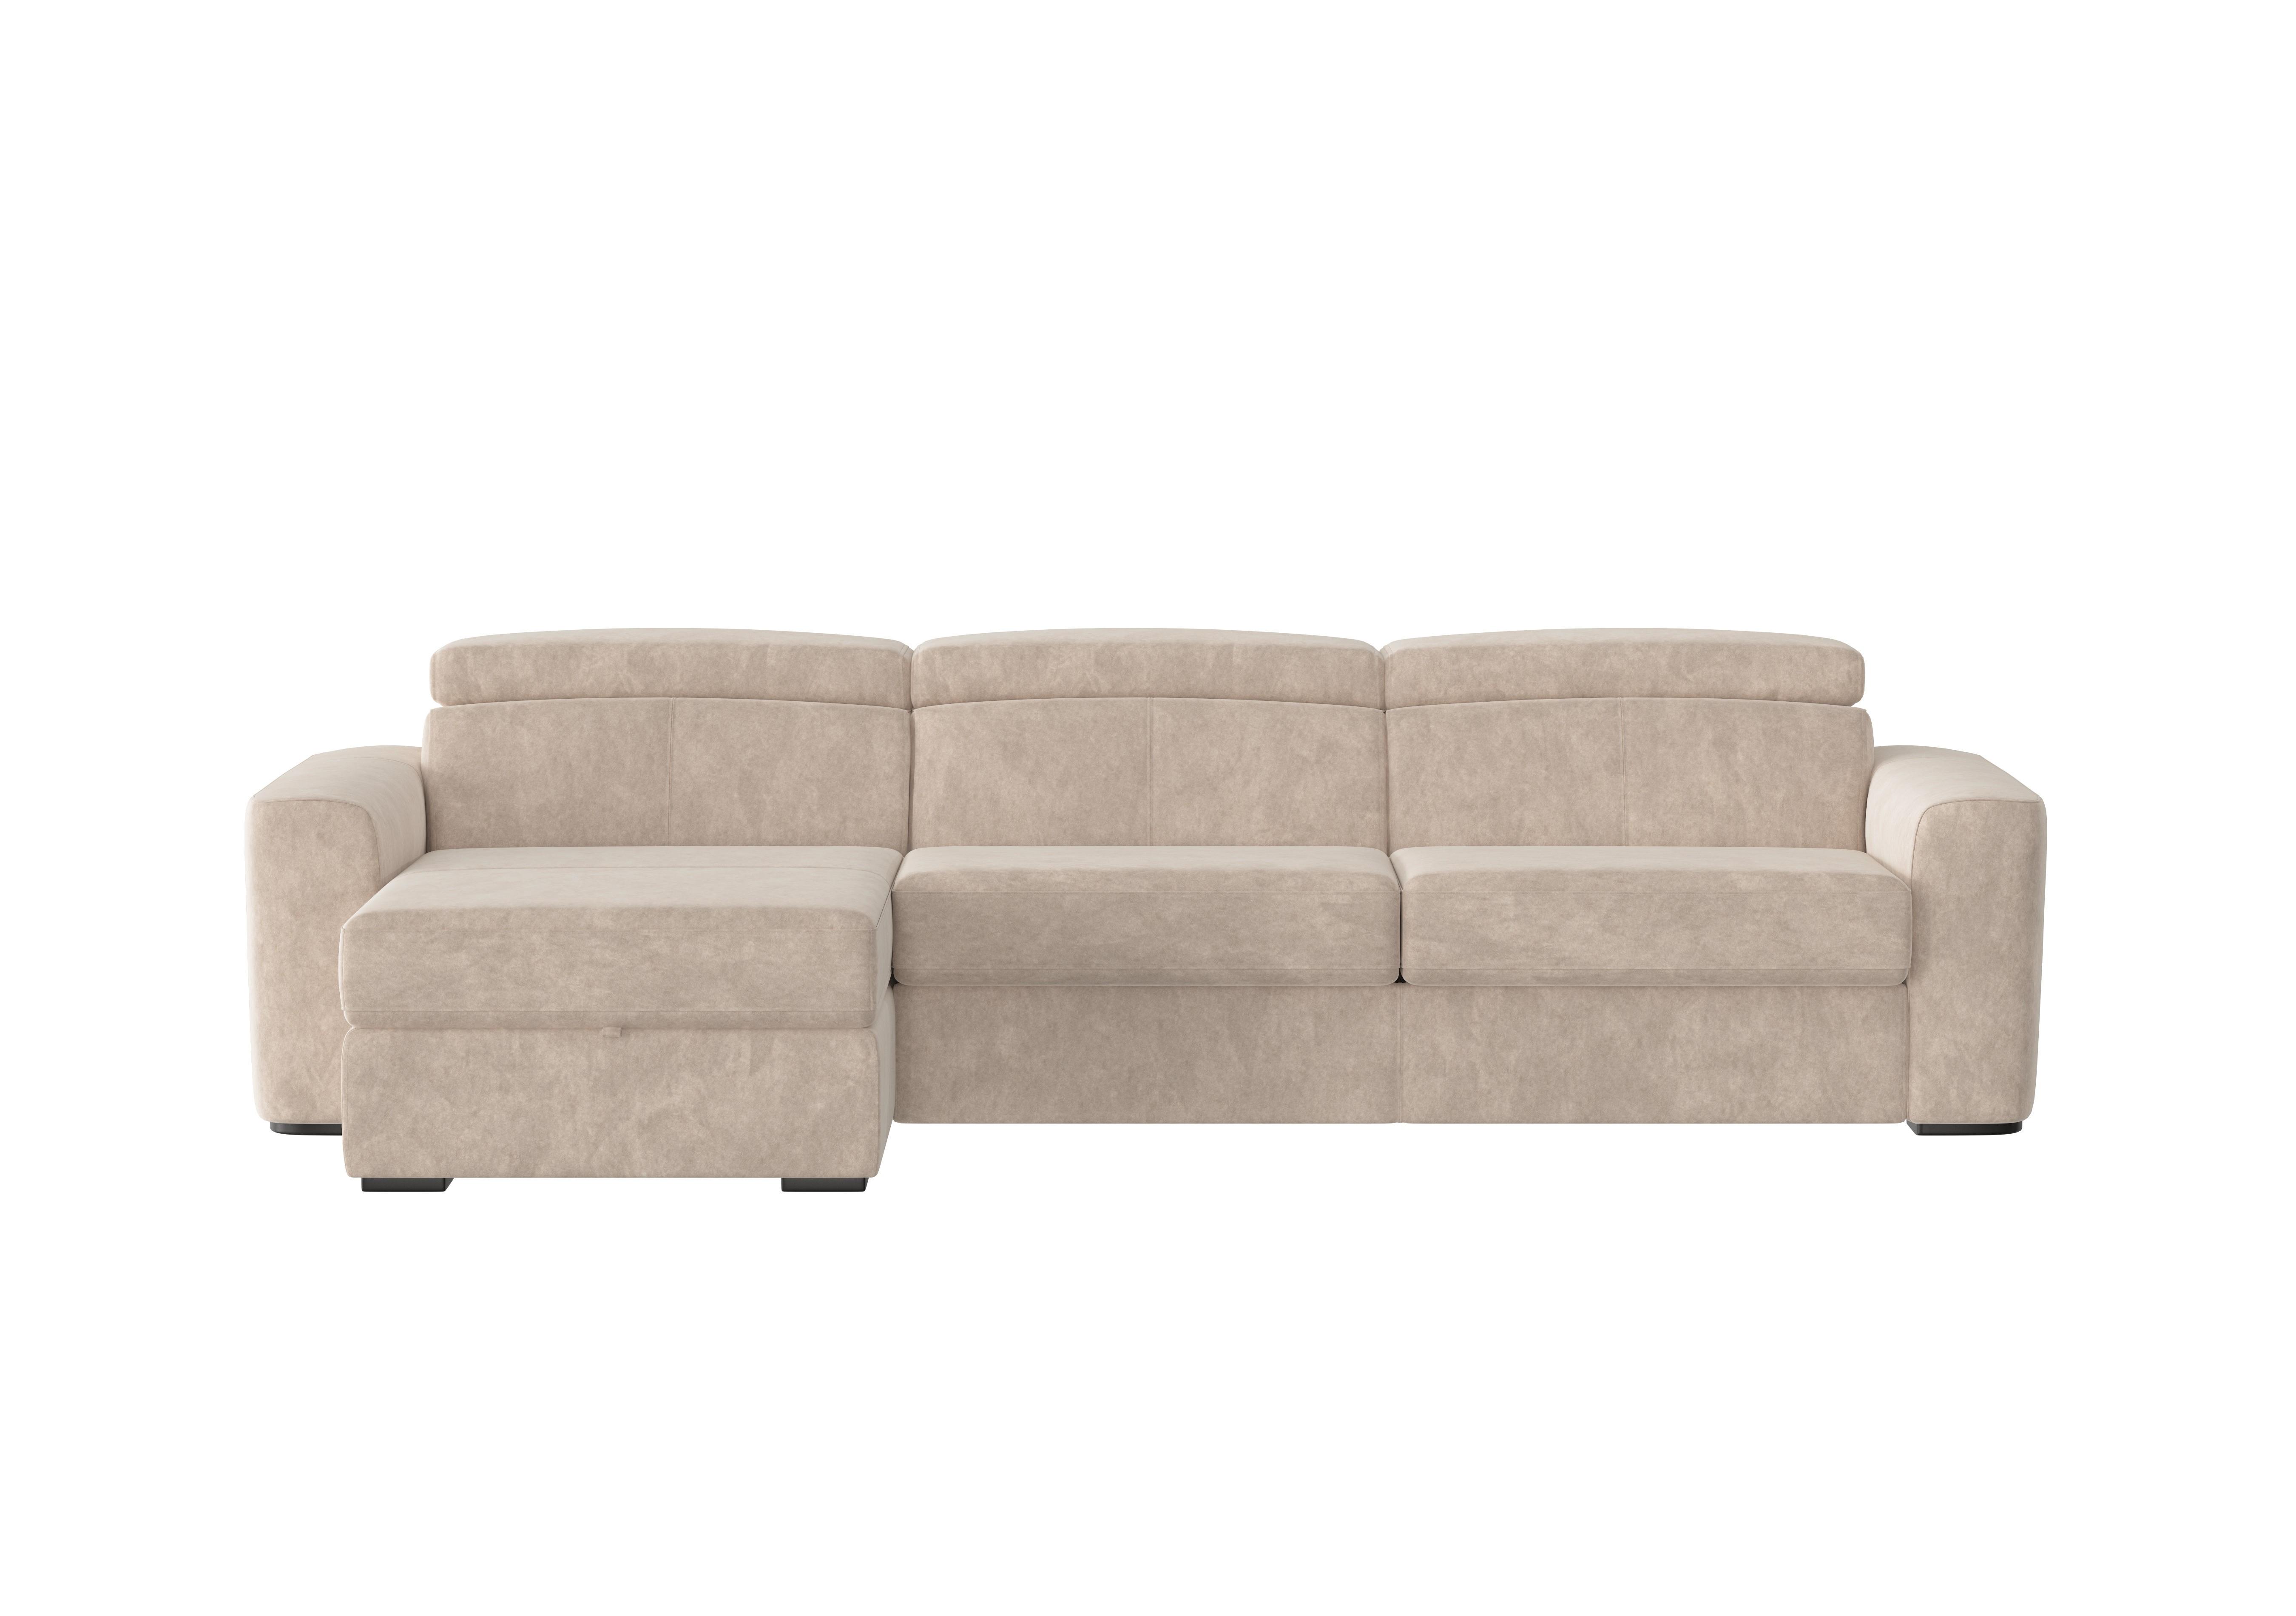 Infinity Fabric Corner Chaise Sofa Bed with Storage in Bfa-Bnn-R26 Fv2 Cream on Furniture Village